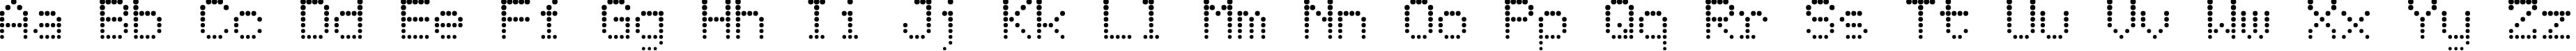 Пример написания английского алфавита шрифтом Atomic Clock Radio